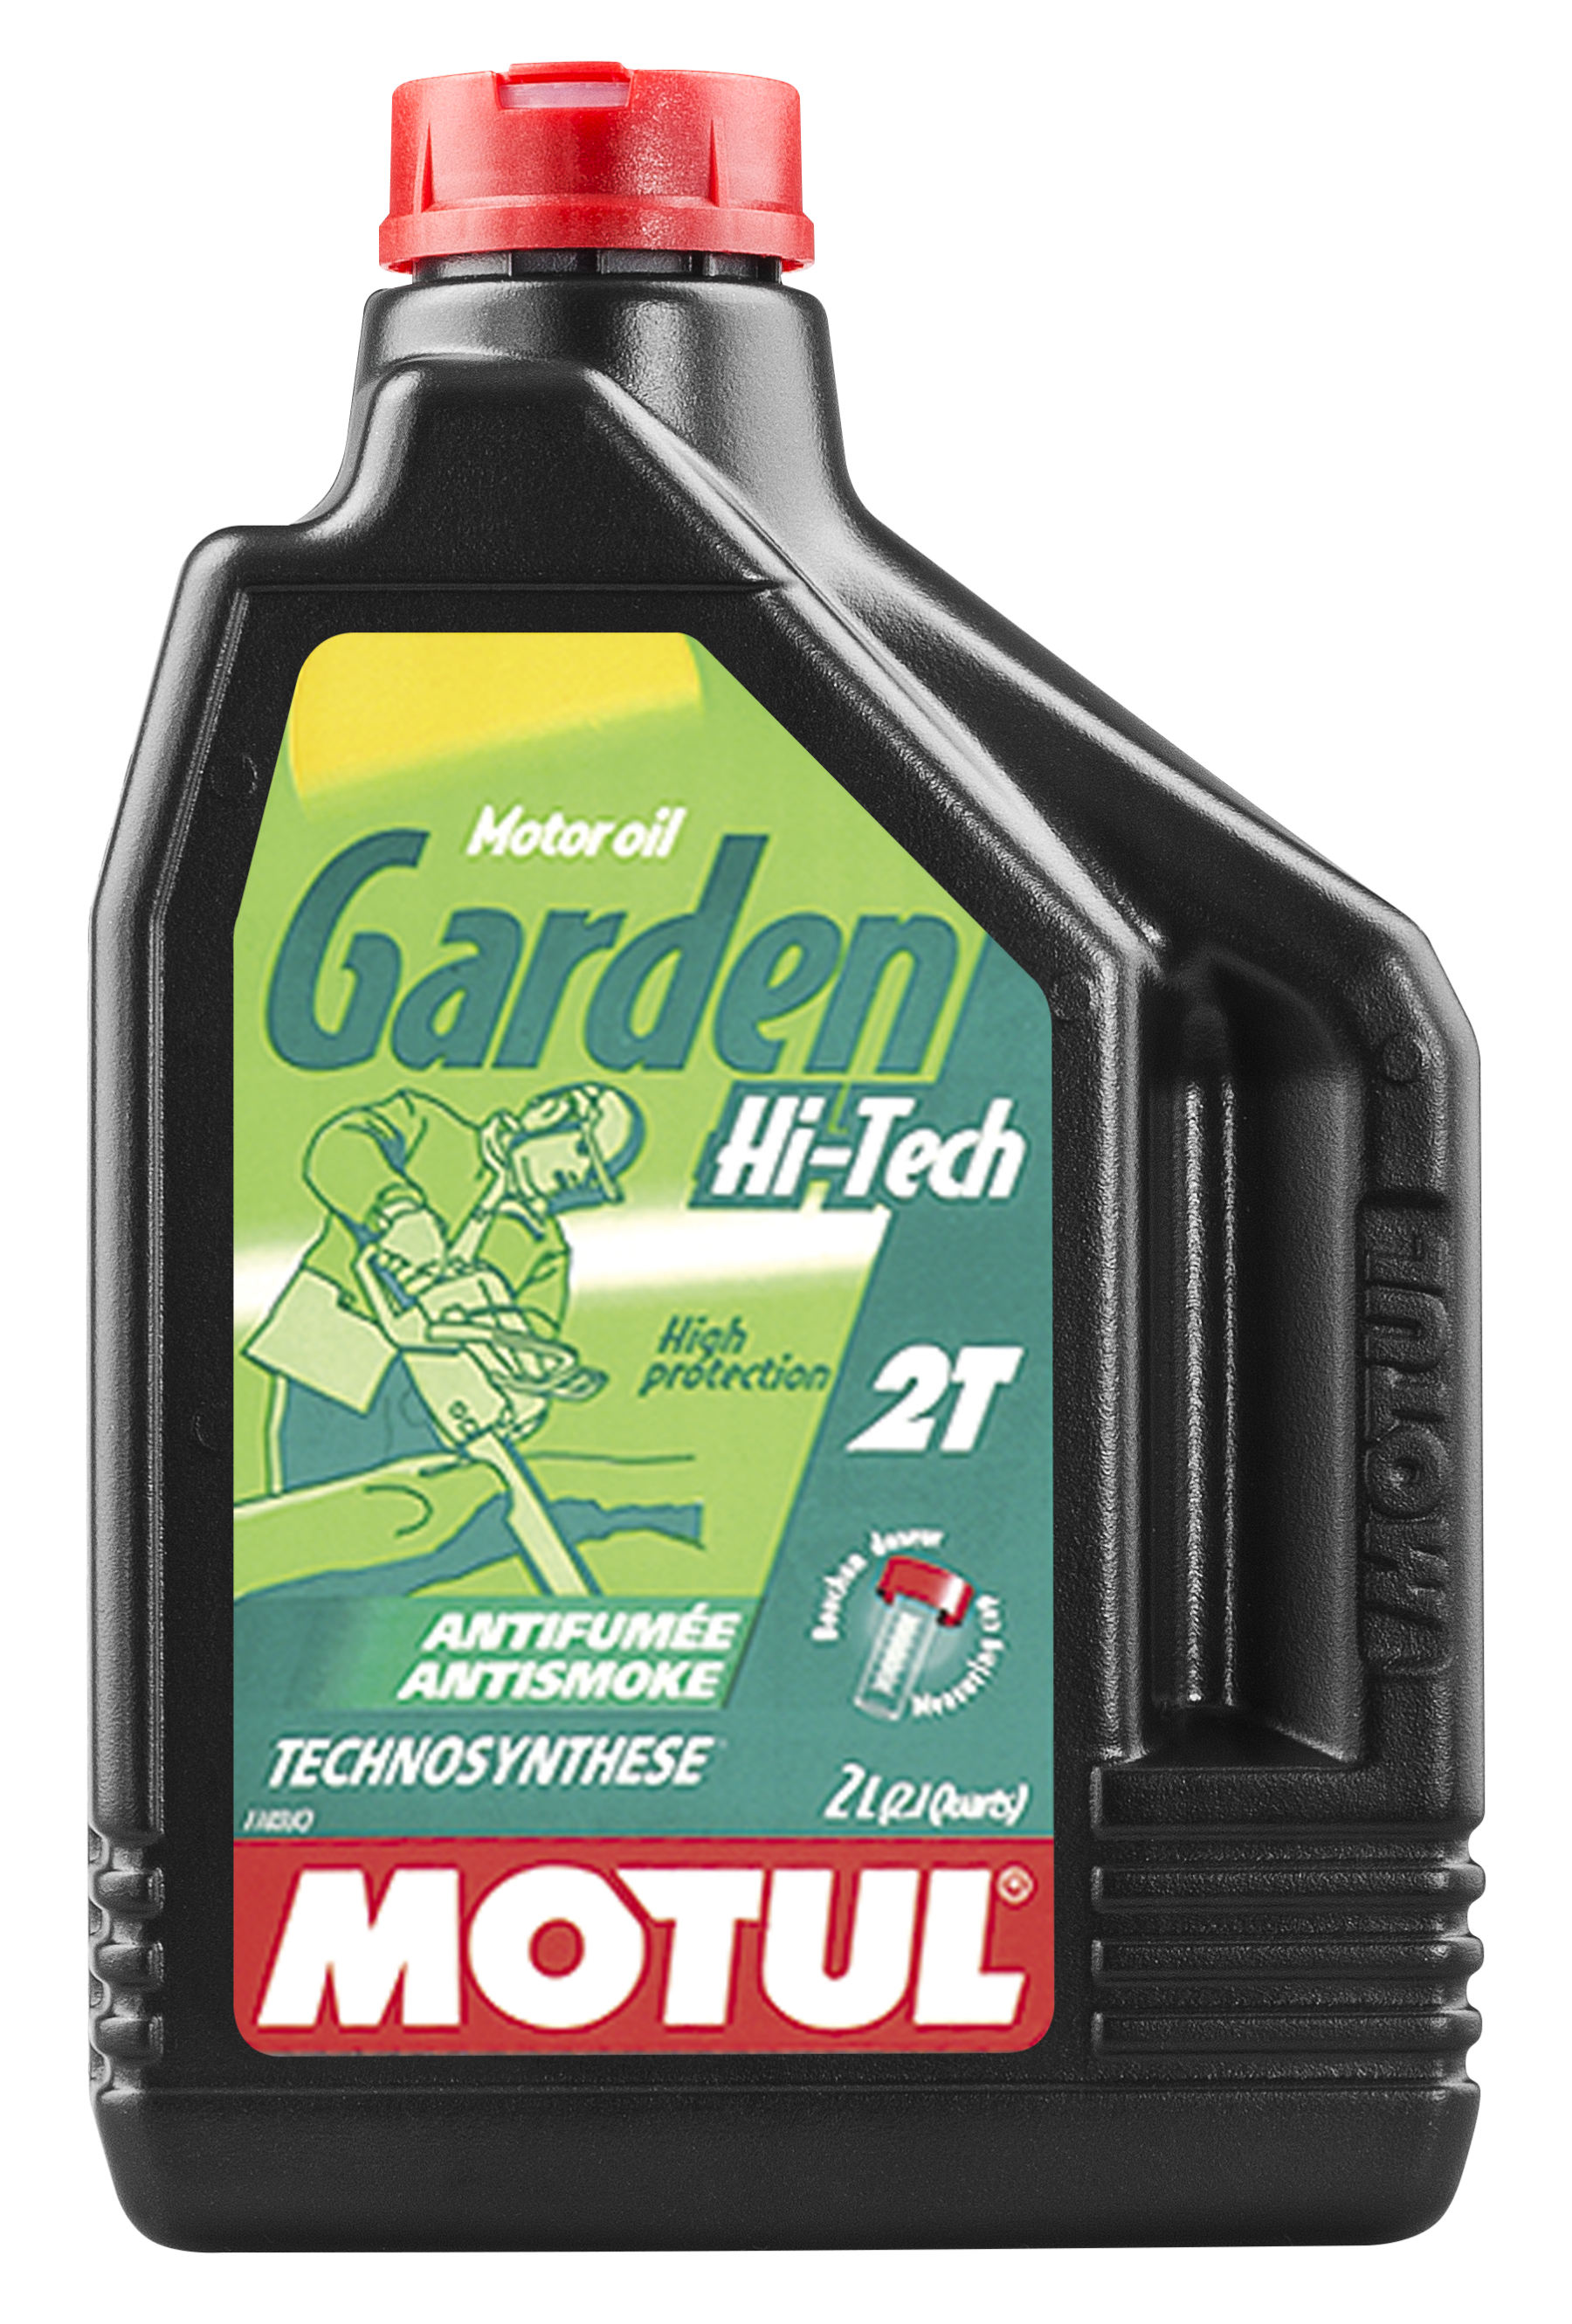 MOTUL Garden 2T HI-Tech